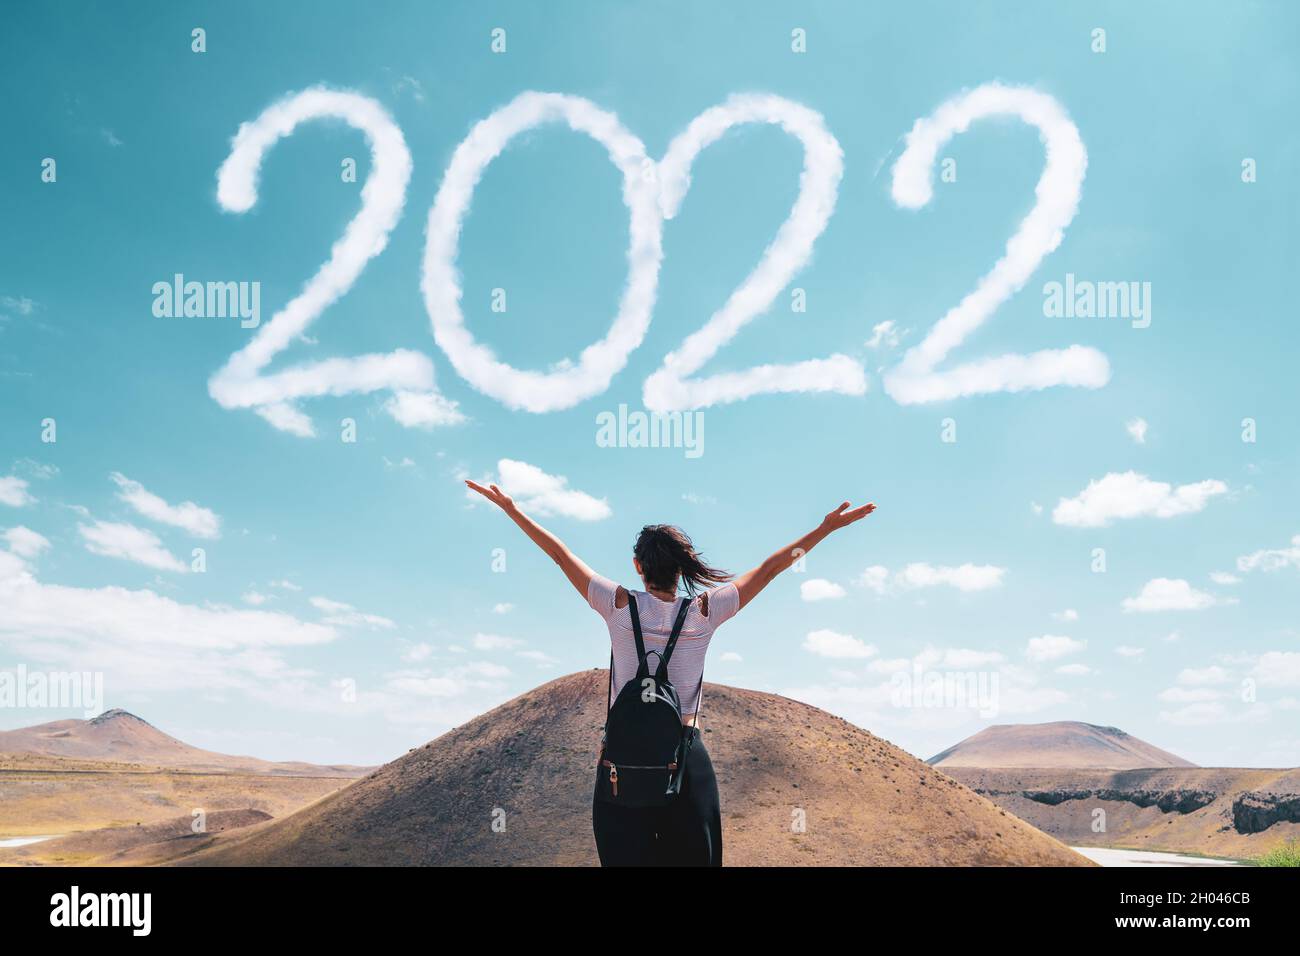 Brunette Frau begrüßt die 2022 gegen Wolken. Stockfoto